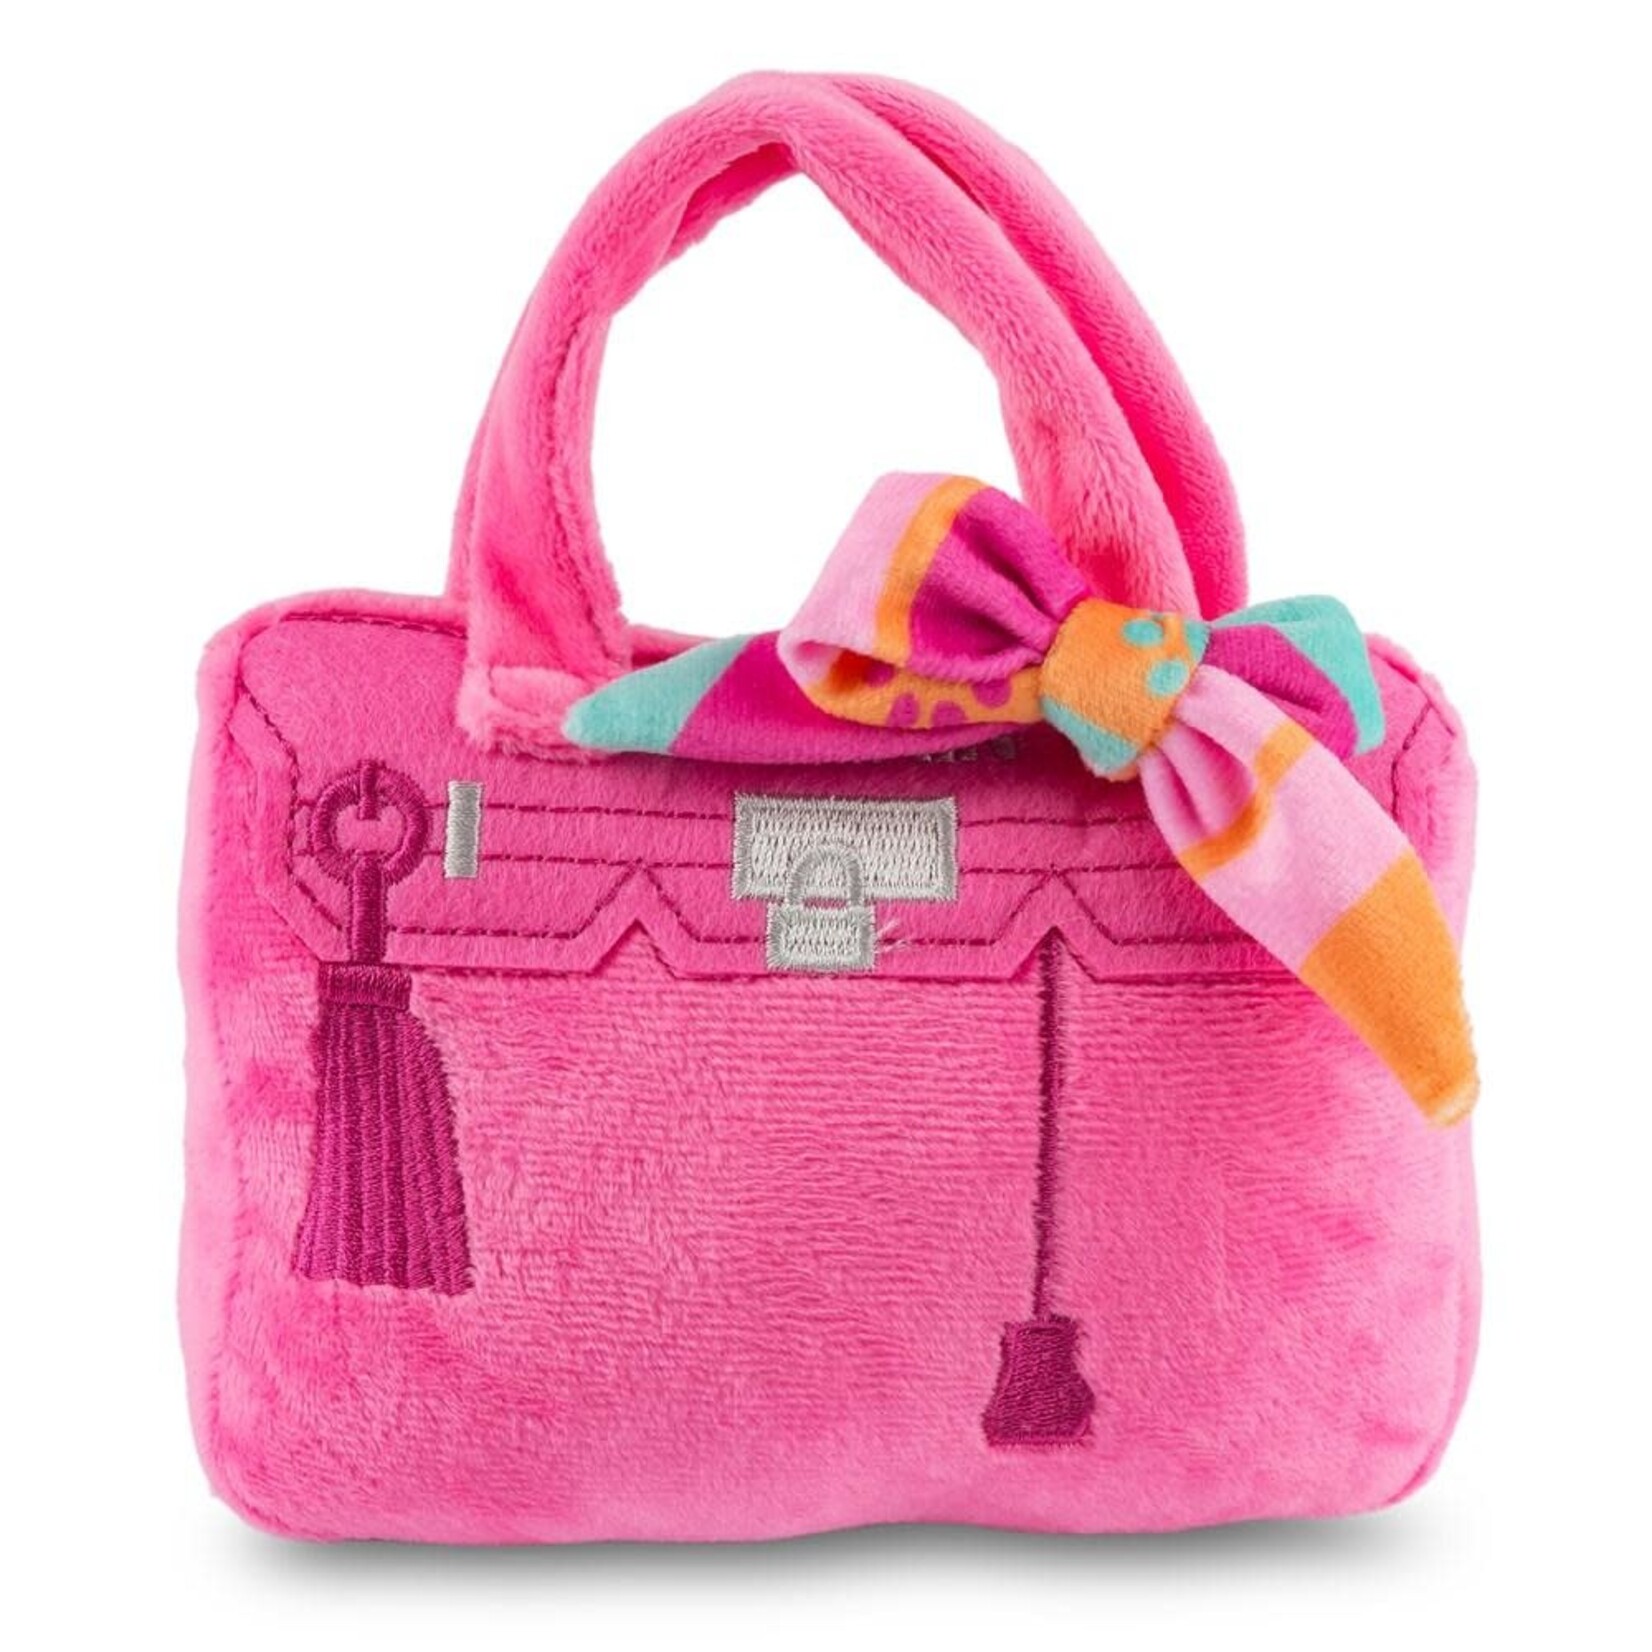 Barkin Bag - Pink w/ Scarf LG